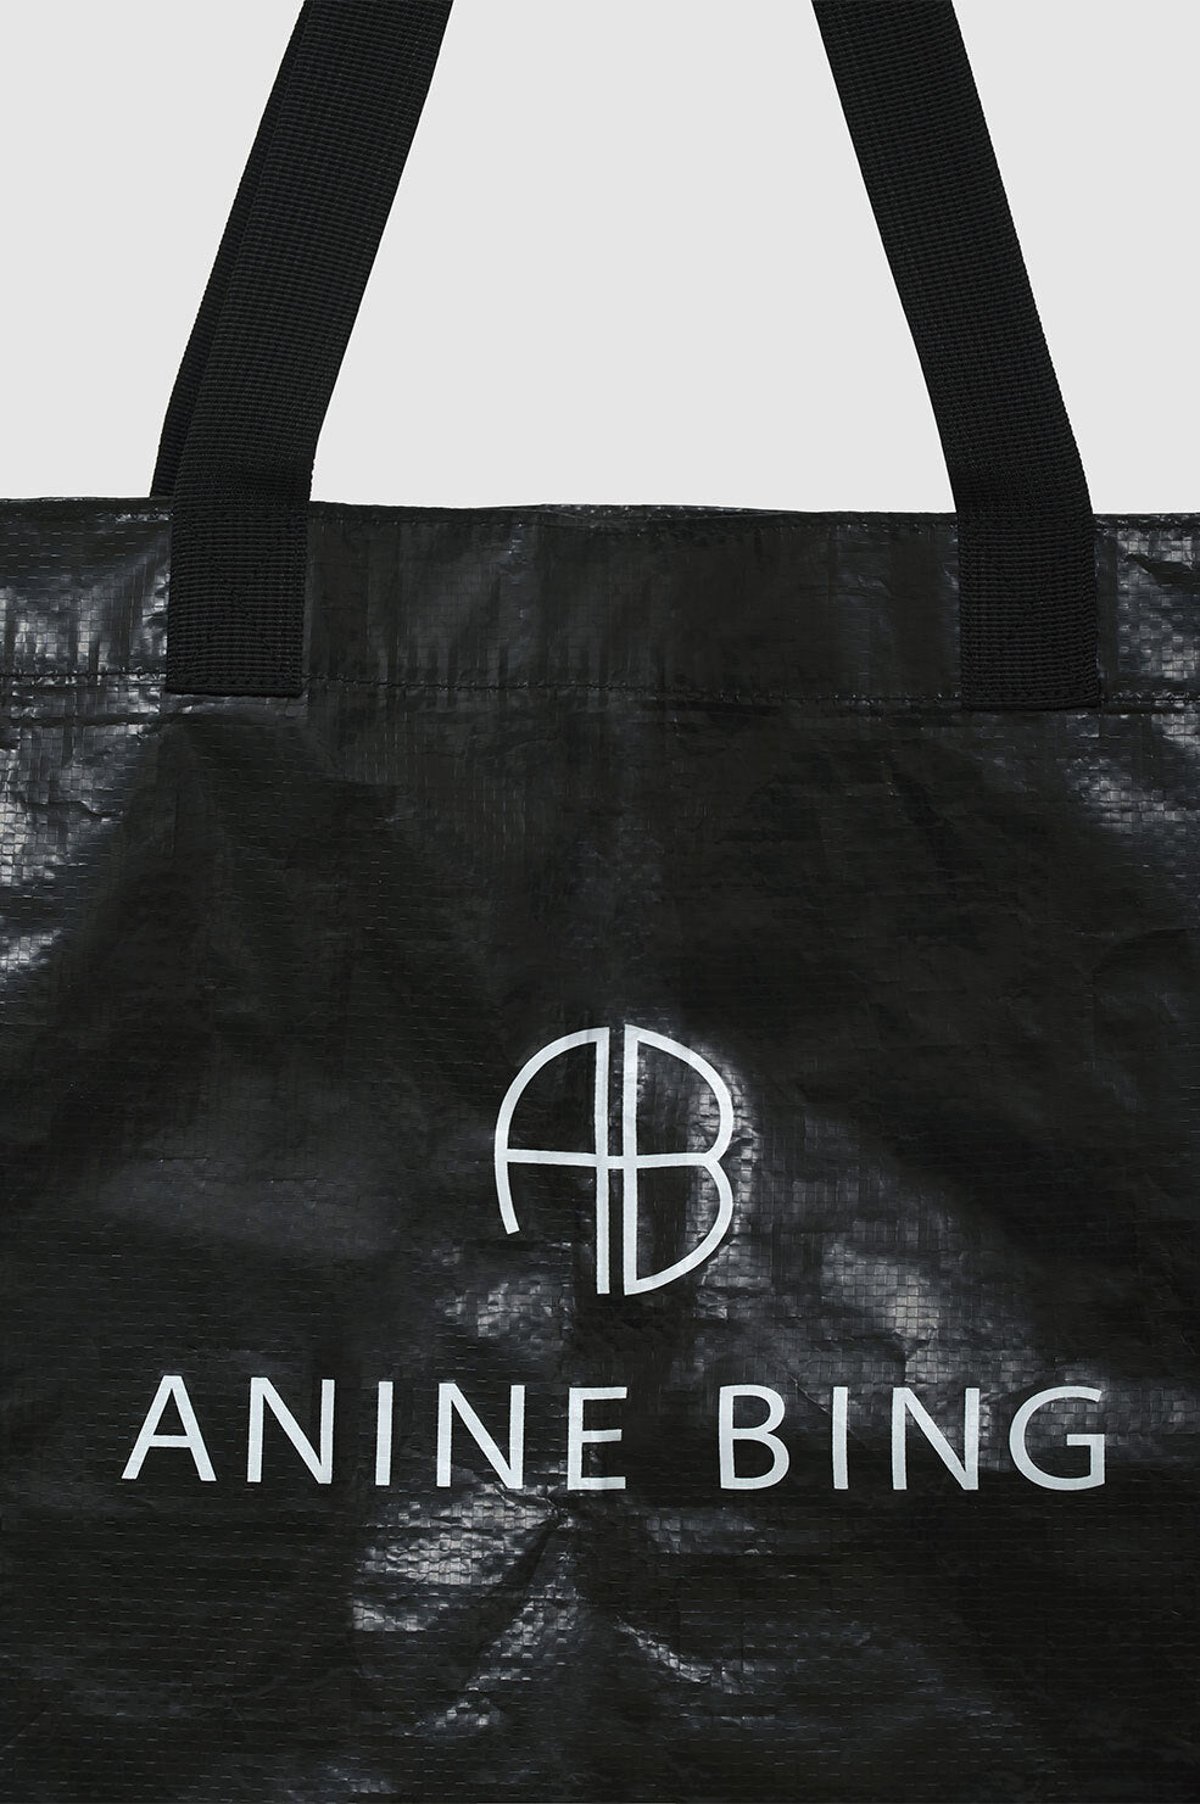 ANINE BING Tote Bags